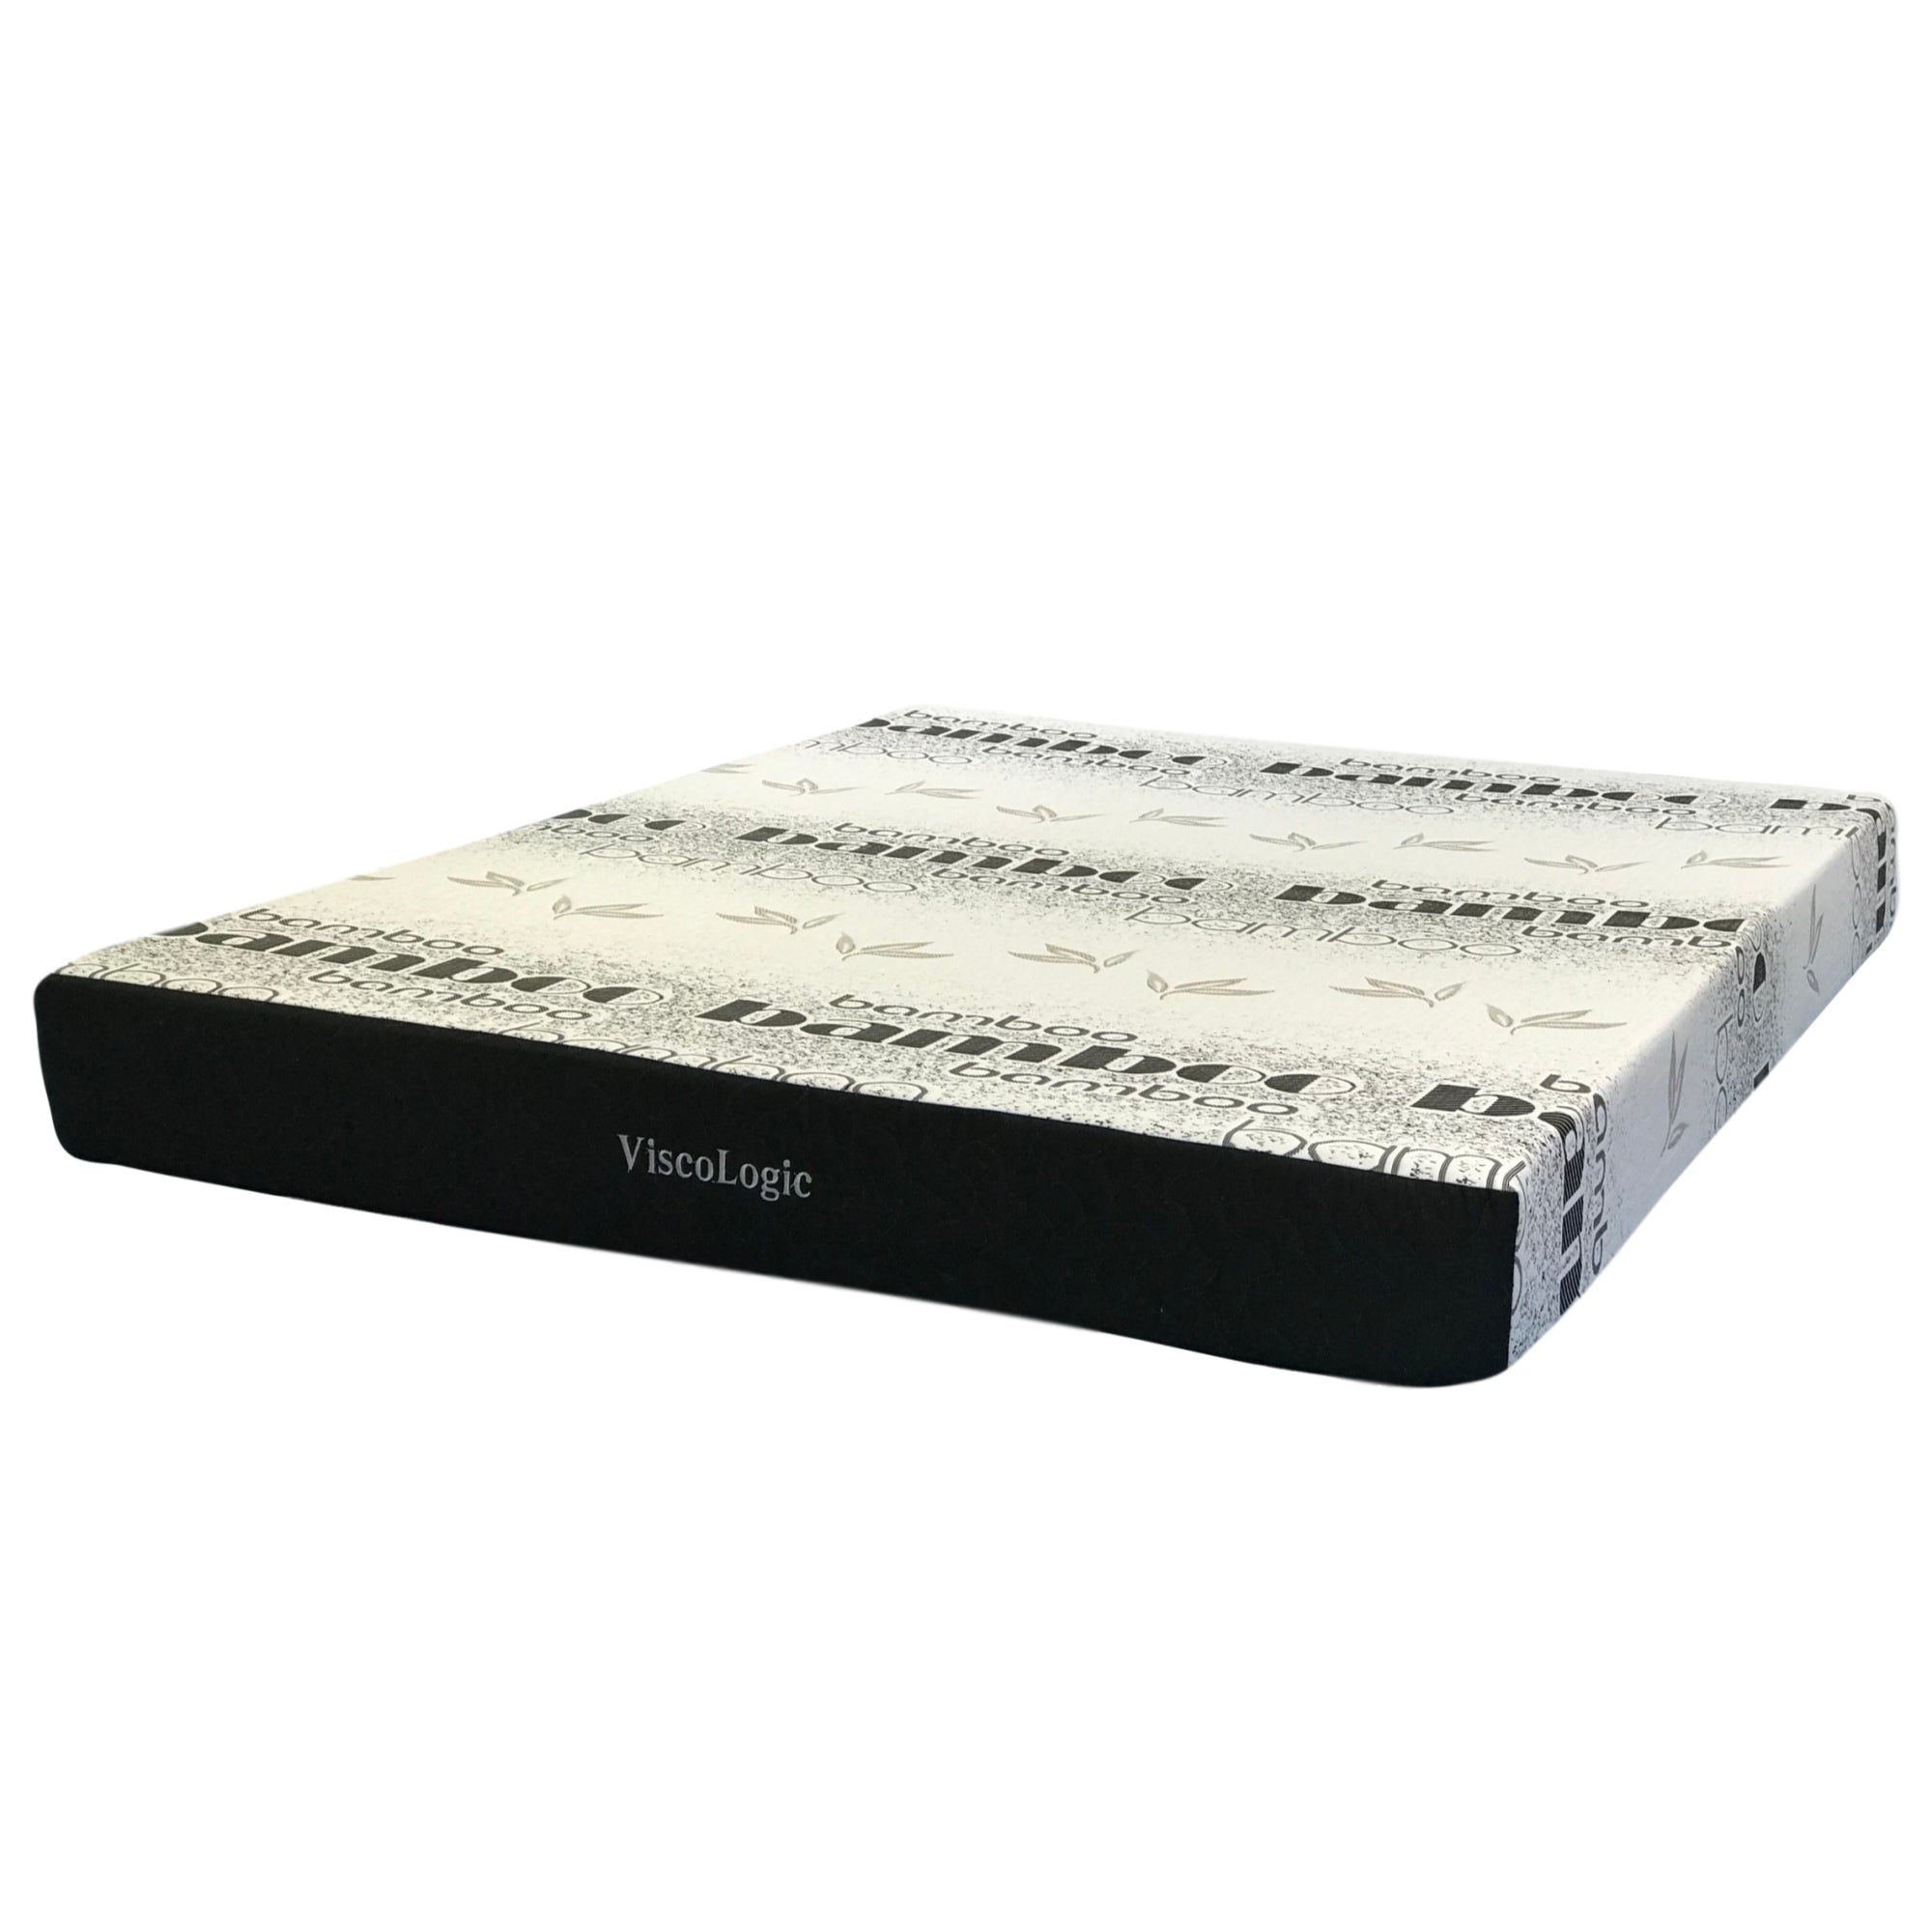 ViscoLogic Platform Metal Bed with 8" Memory Foam Mattress Set (Queen)